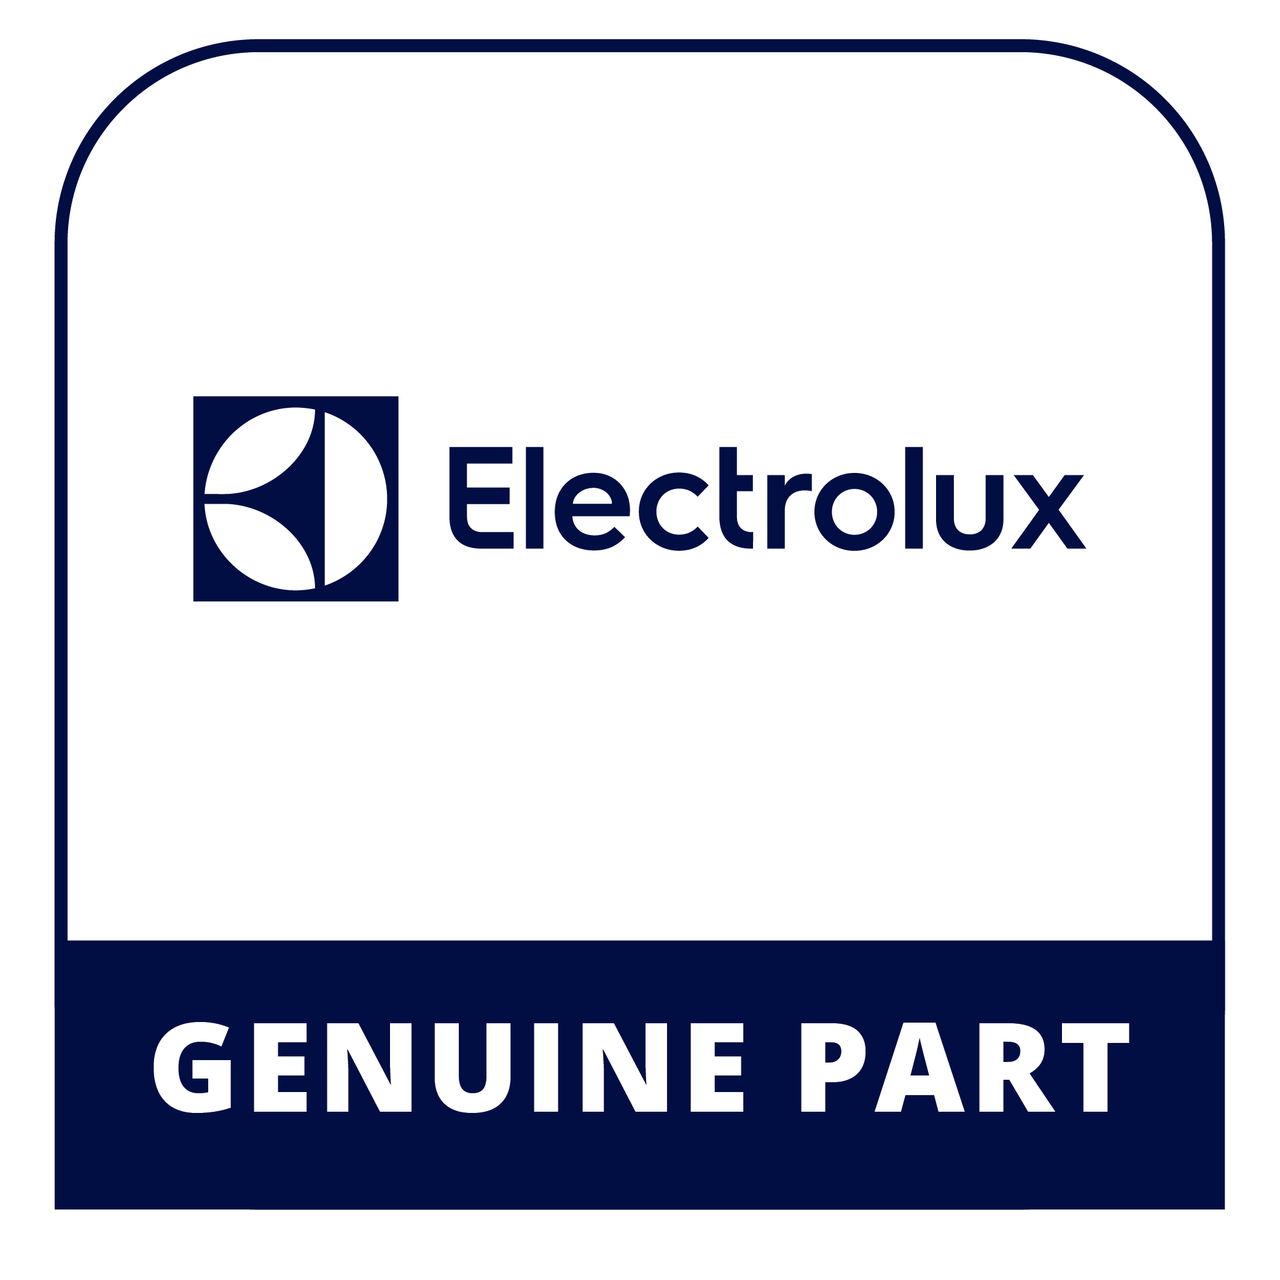 Frigidaire - Electrolux 405531377 Harness Kit - Genuine Electrolux Part